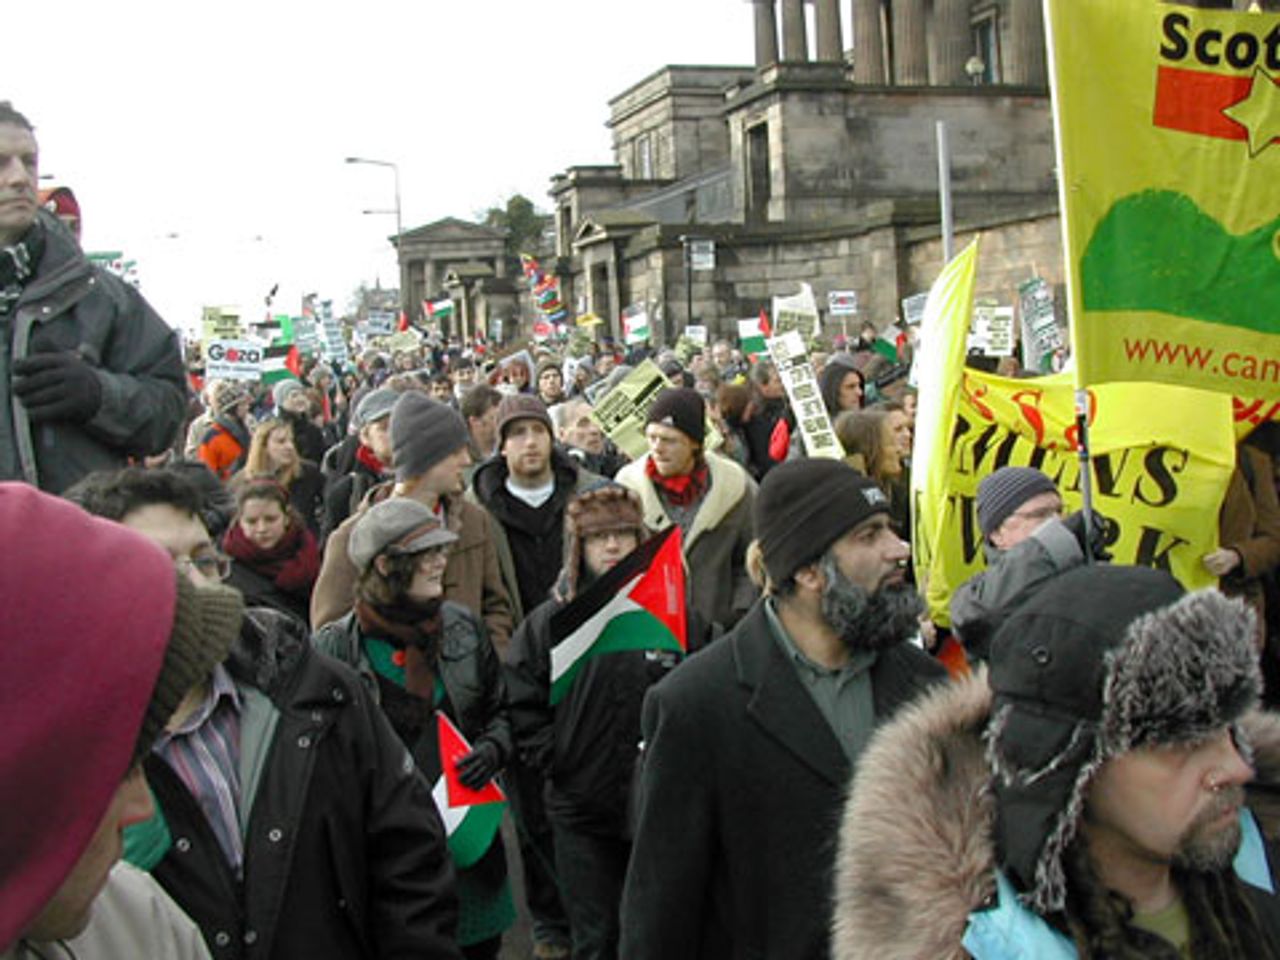 Demonstration in Edinburgh